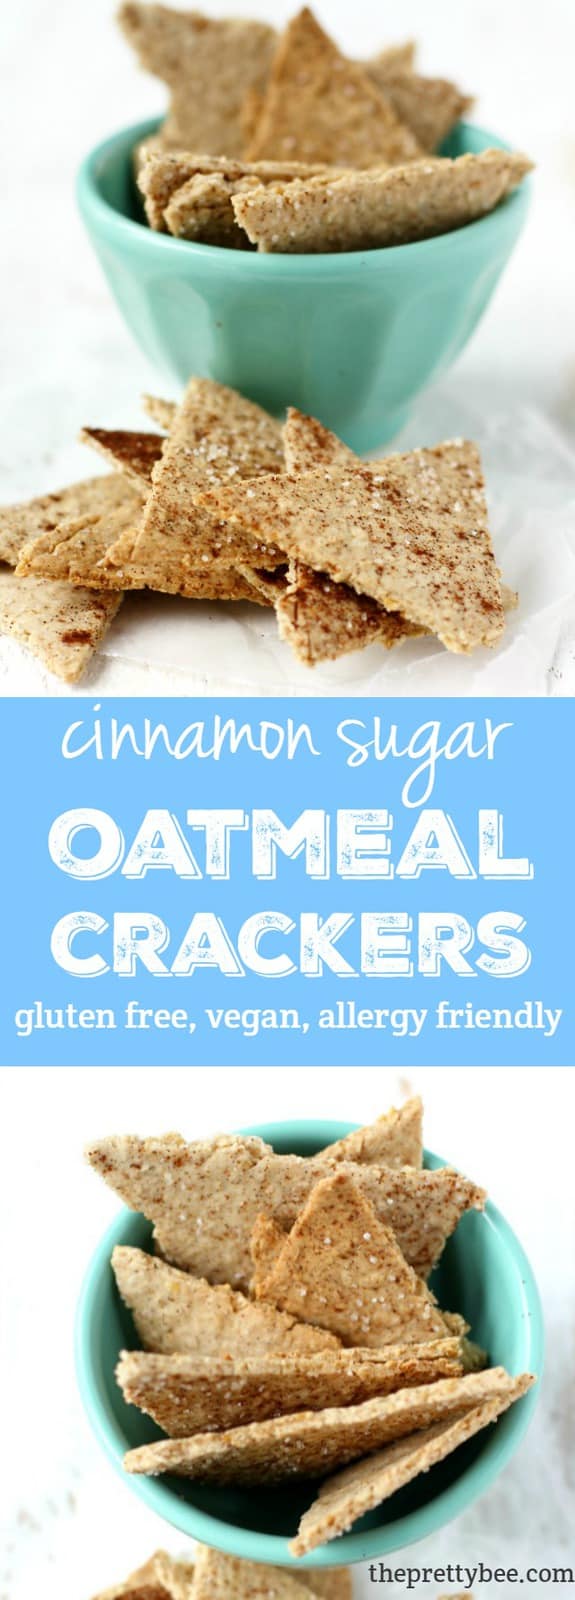 Easy gluten free cinnamon sugar oatmeal cracker recipe. Kids love this healthy snack!